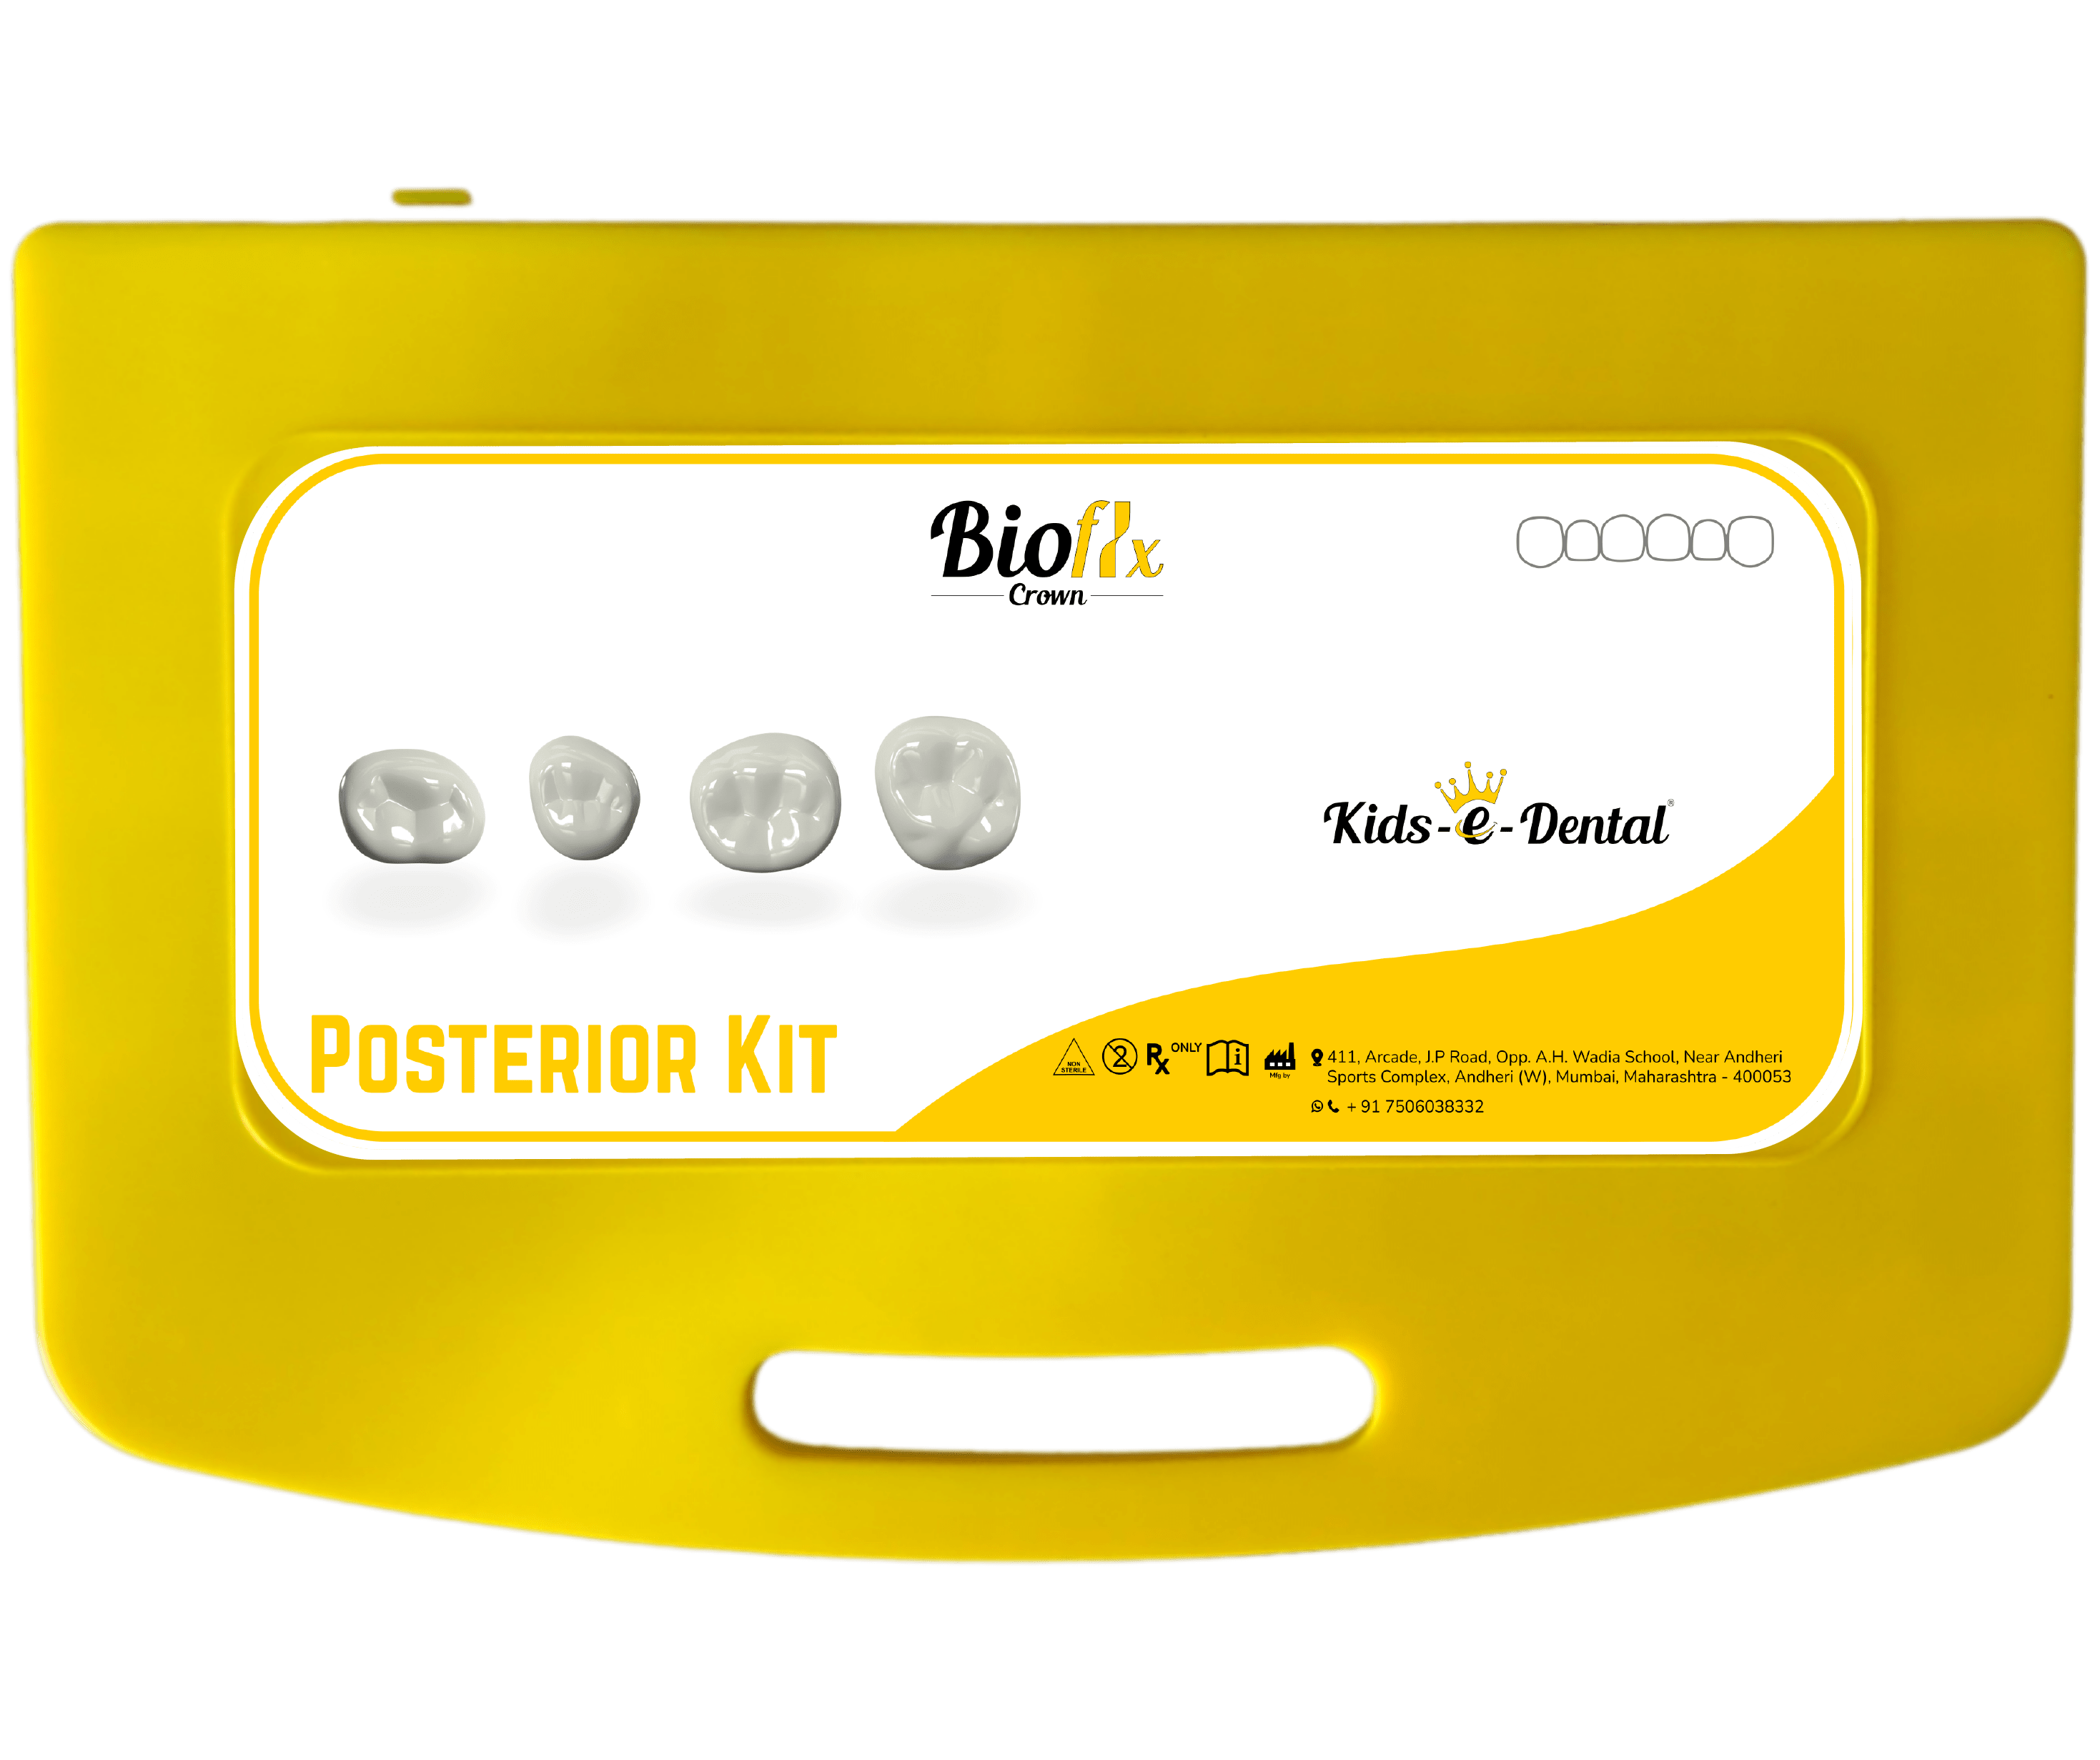 Bioflx Crowns - Posterior First & Second Molar Kit (Starter Kit ) 40 Crowns